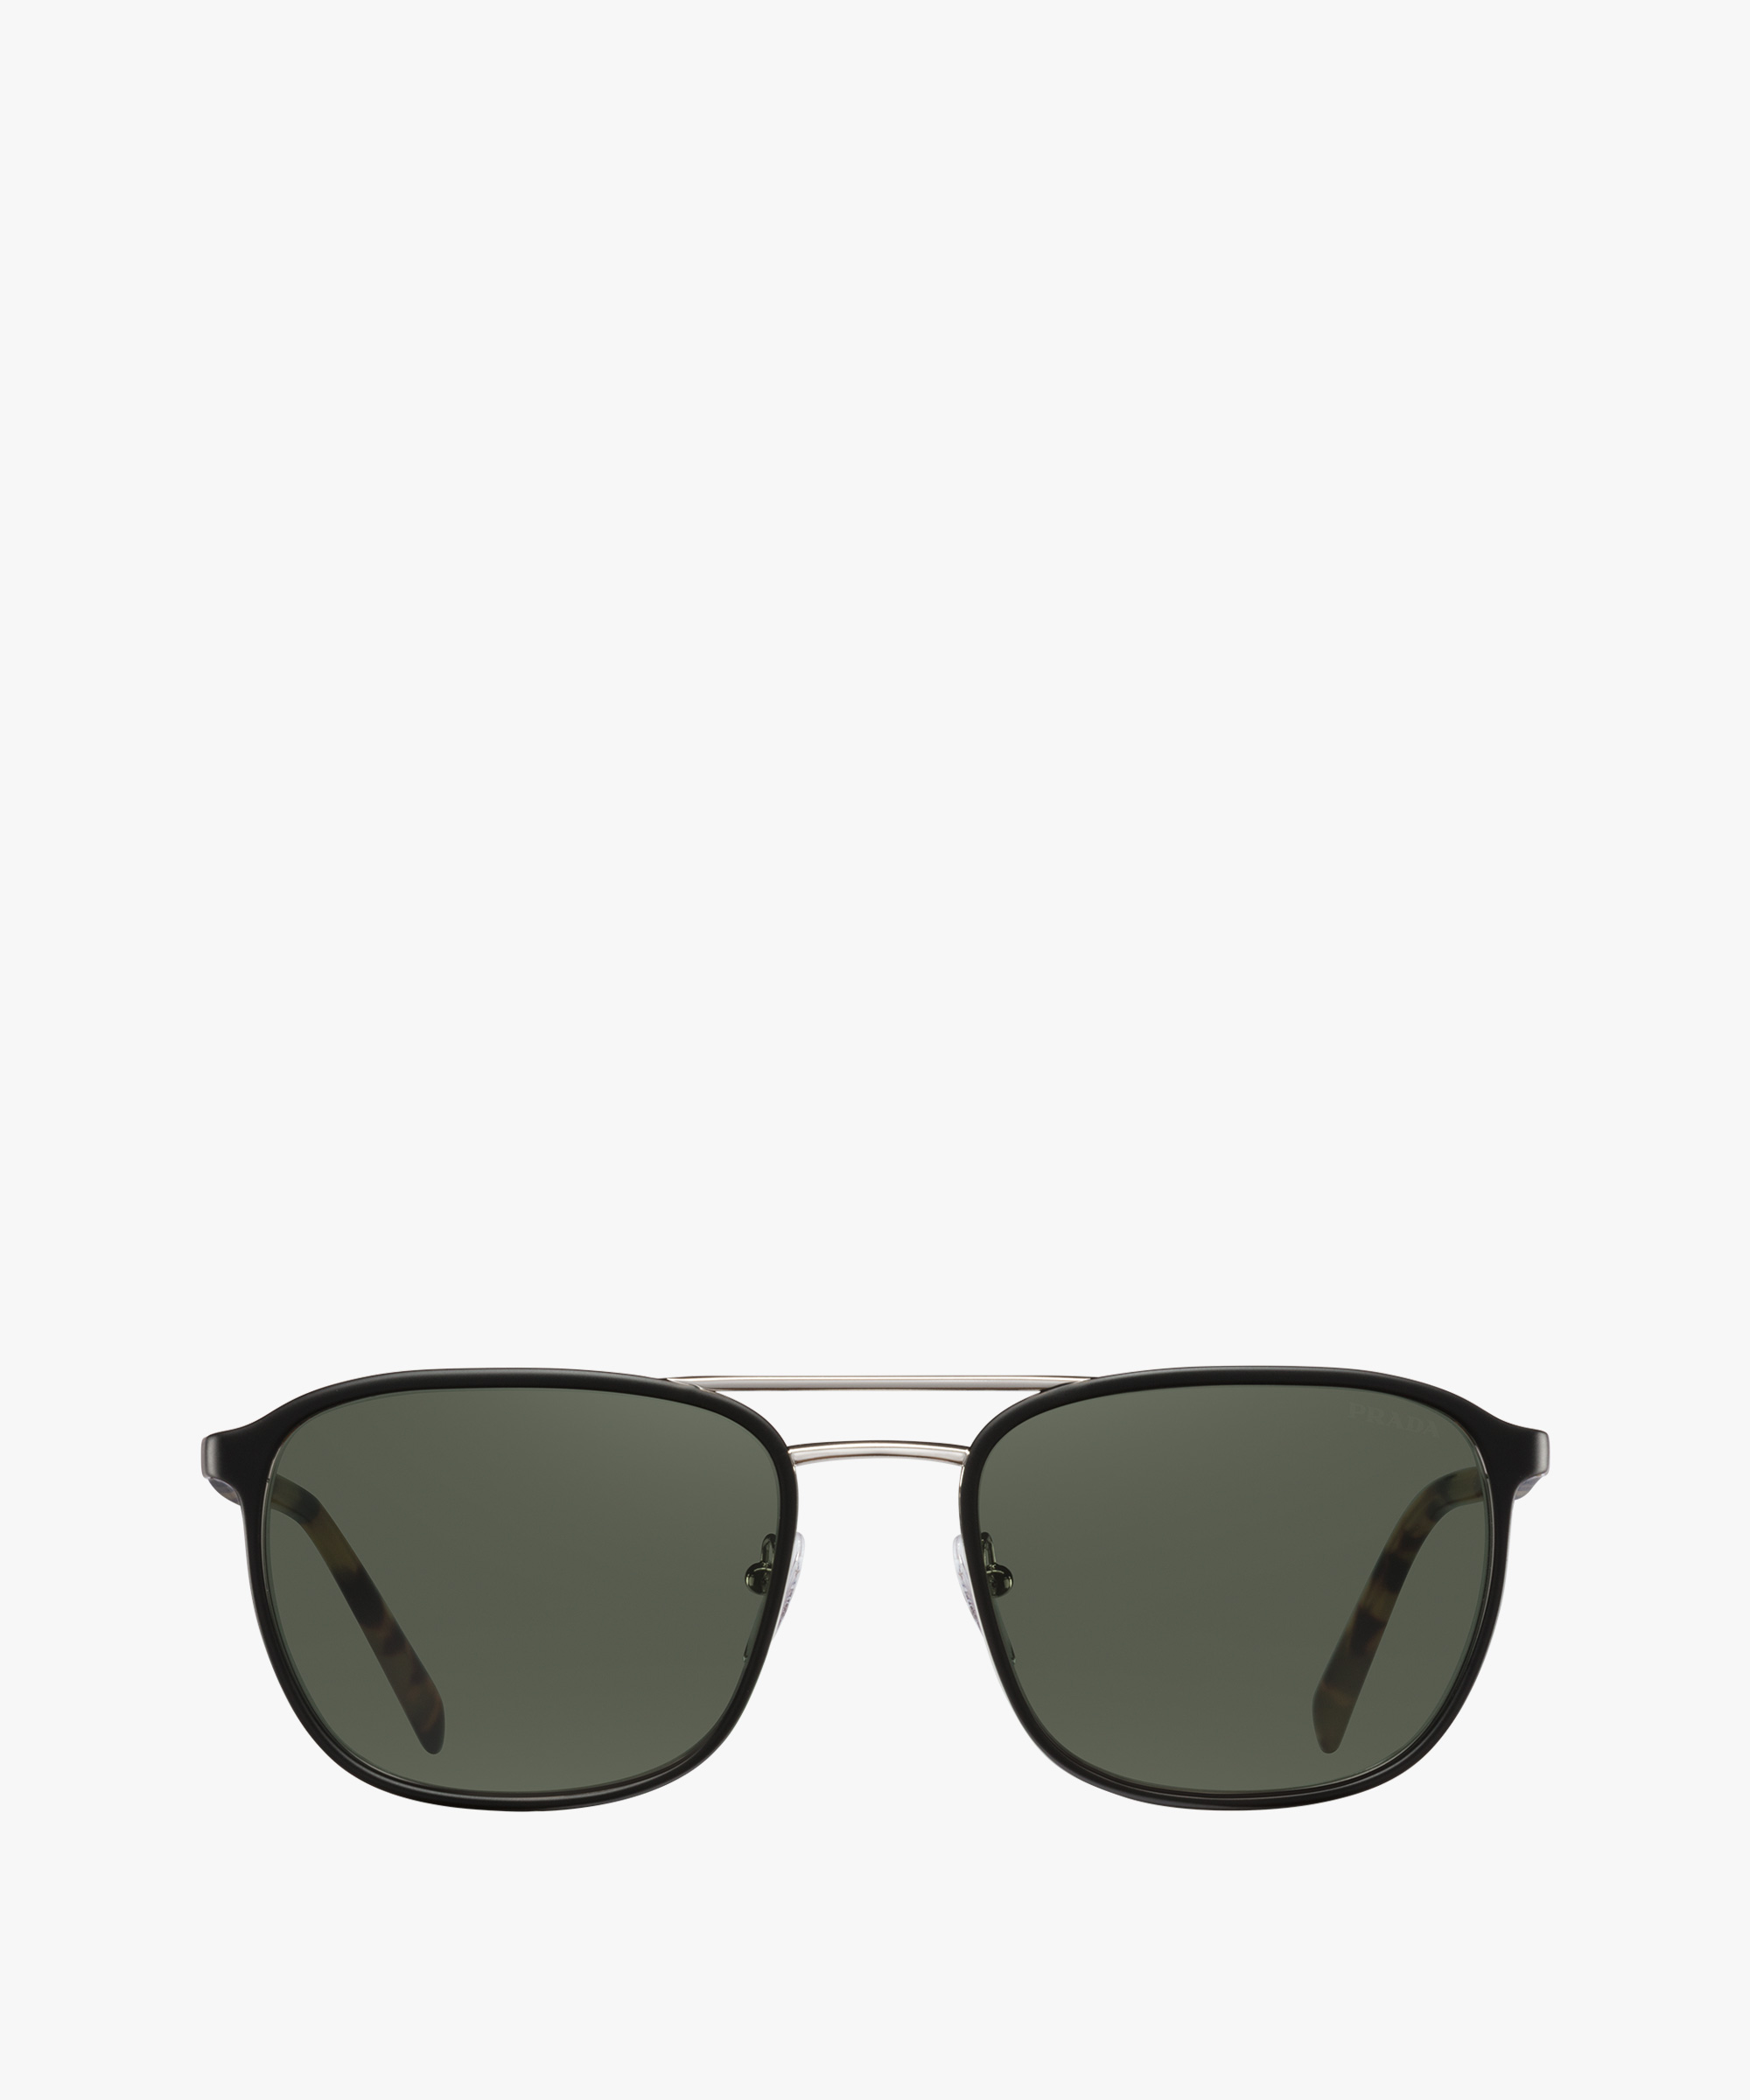 Prada Eyewear Collection sunglasses | Prada